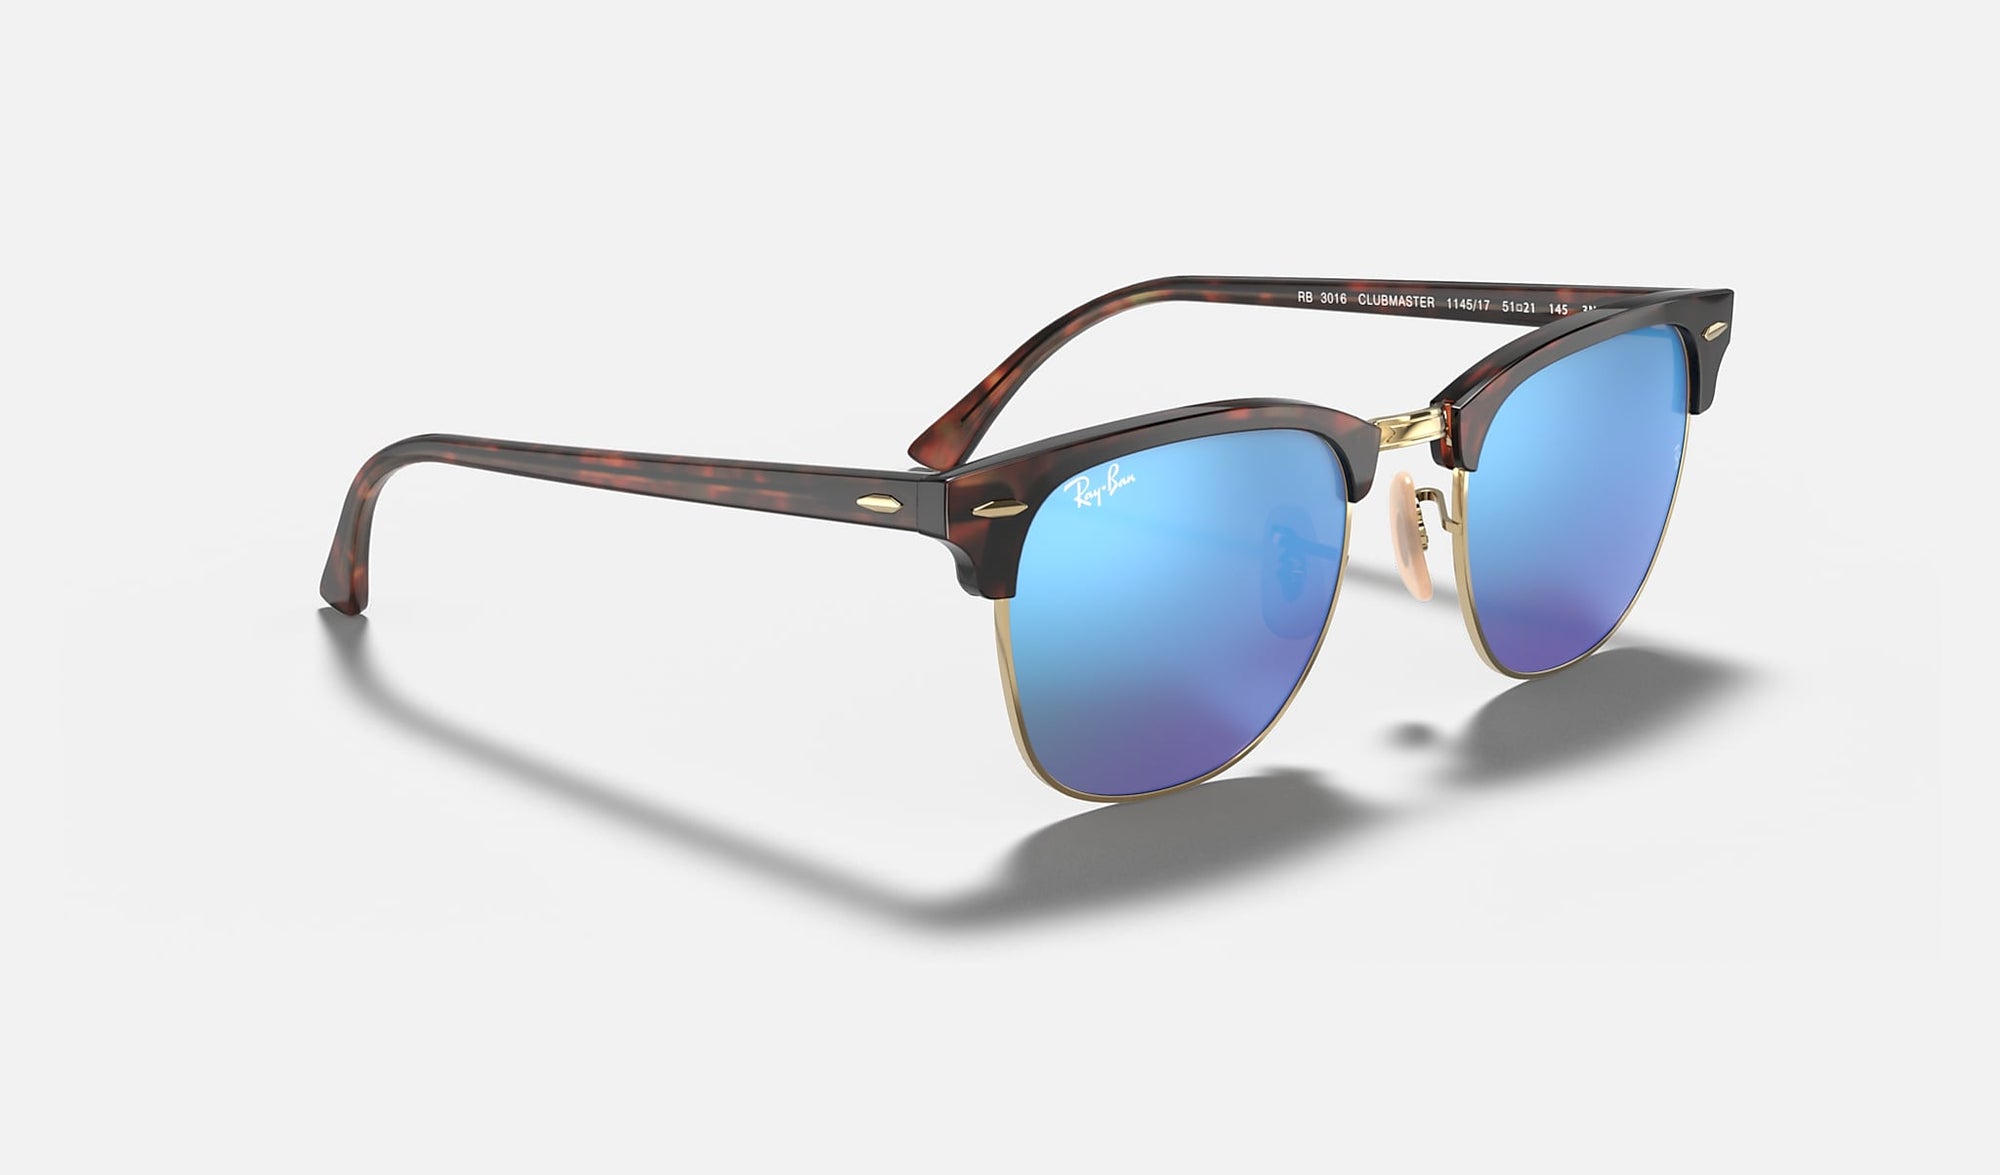 RAY-BAN Clubmaster Flash Tortoise - Blue Mirror Sunglasses Sunglasses Ray-Ban 